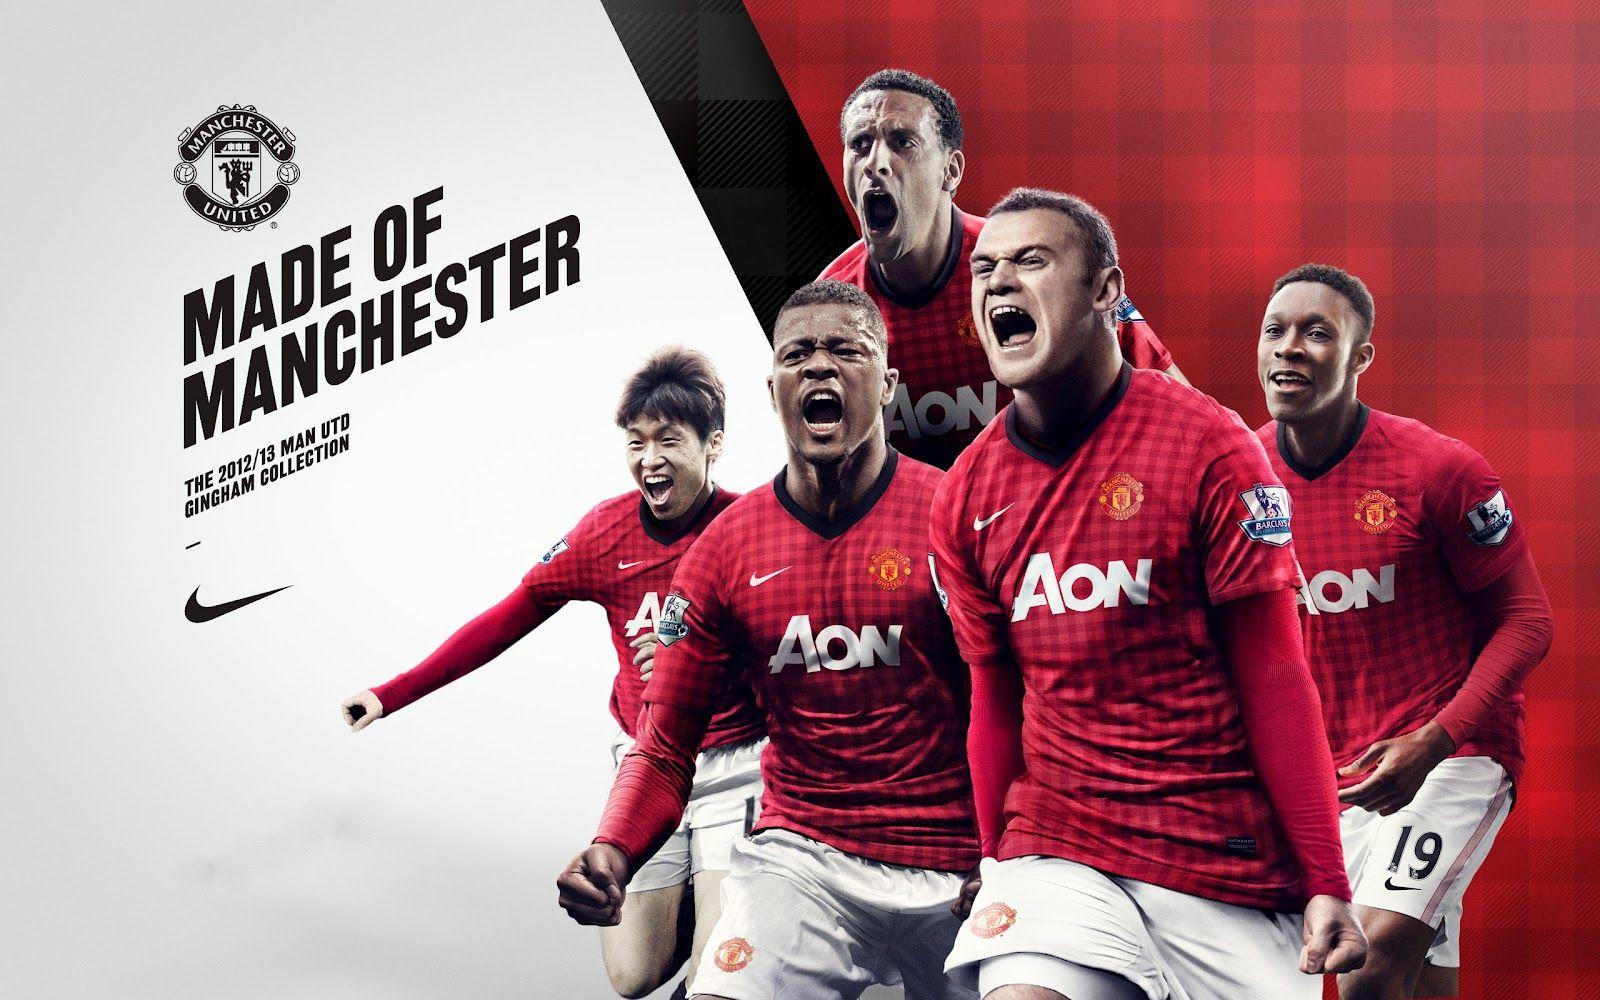 All Wallpaper: Manchester United logo